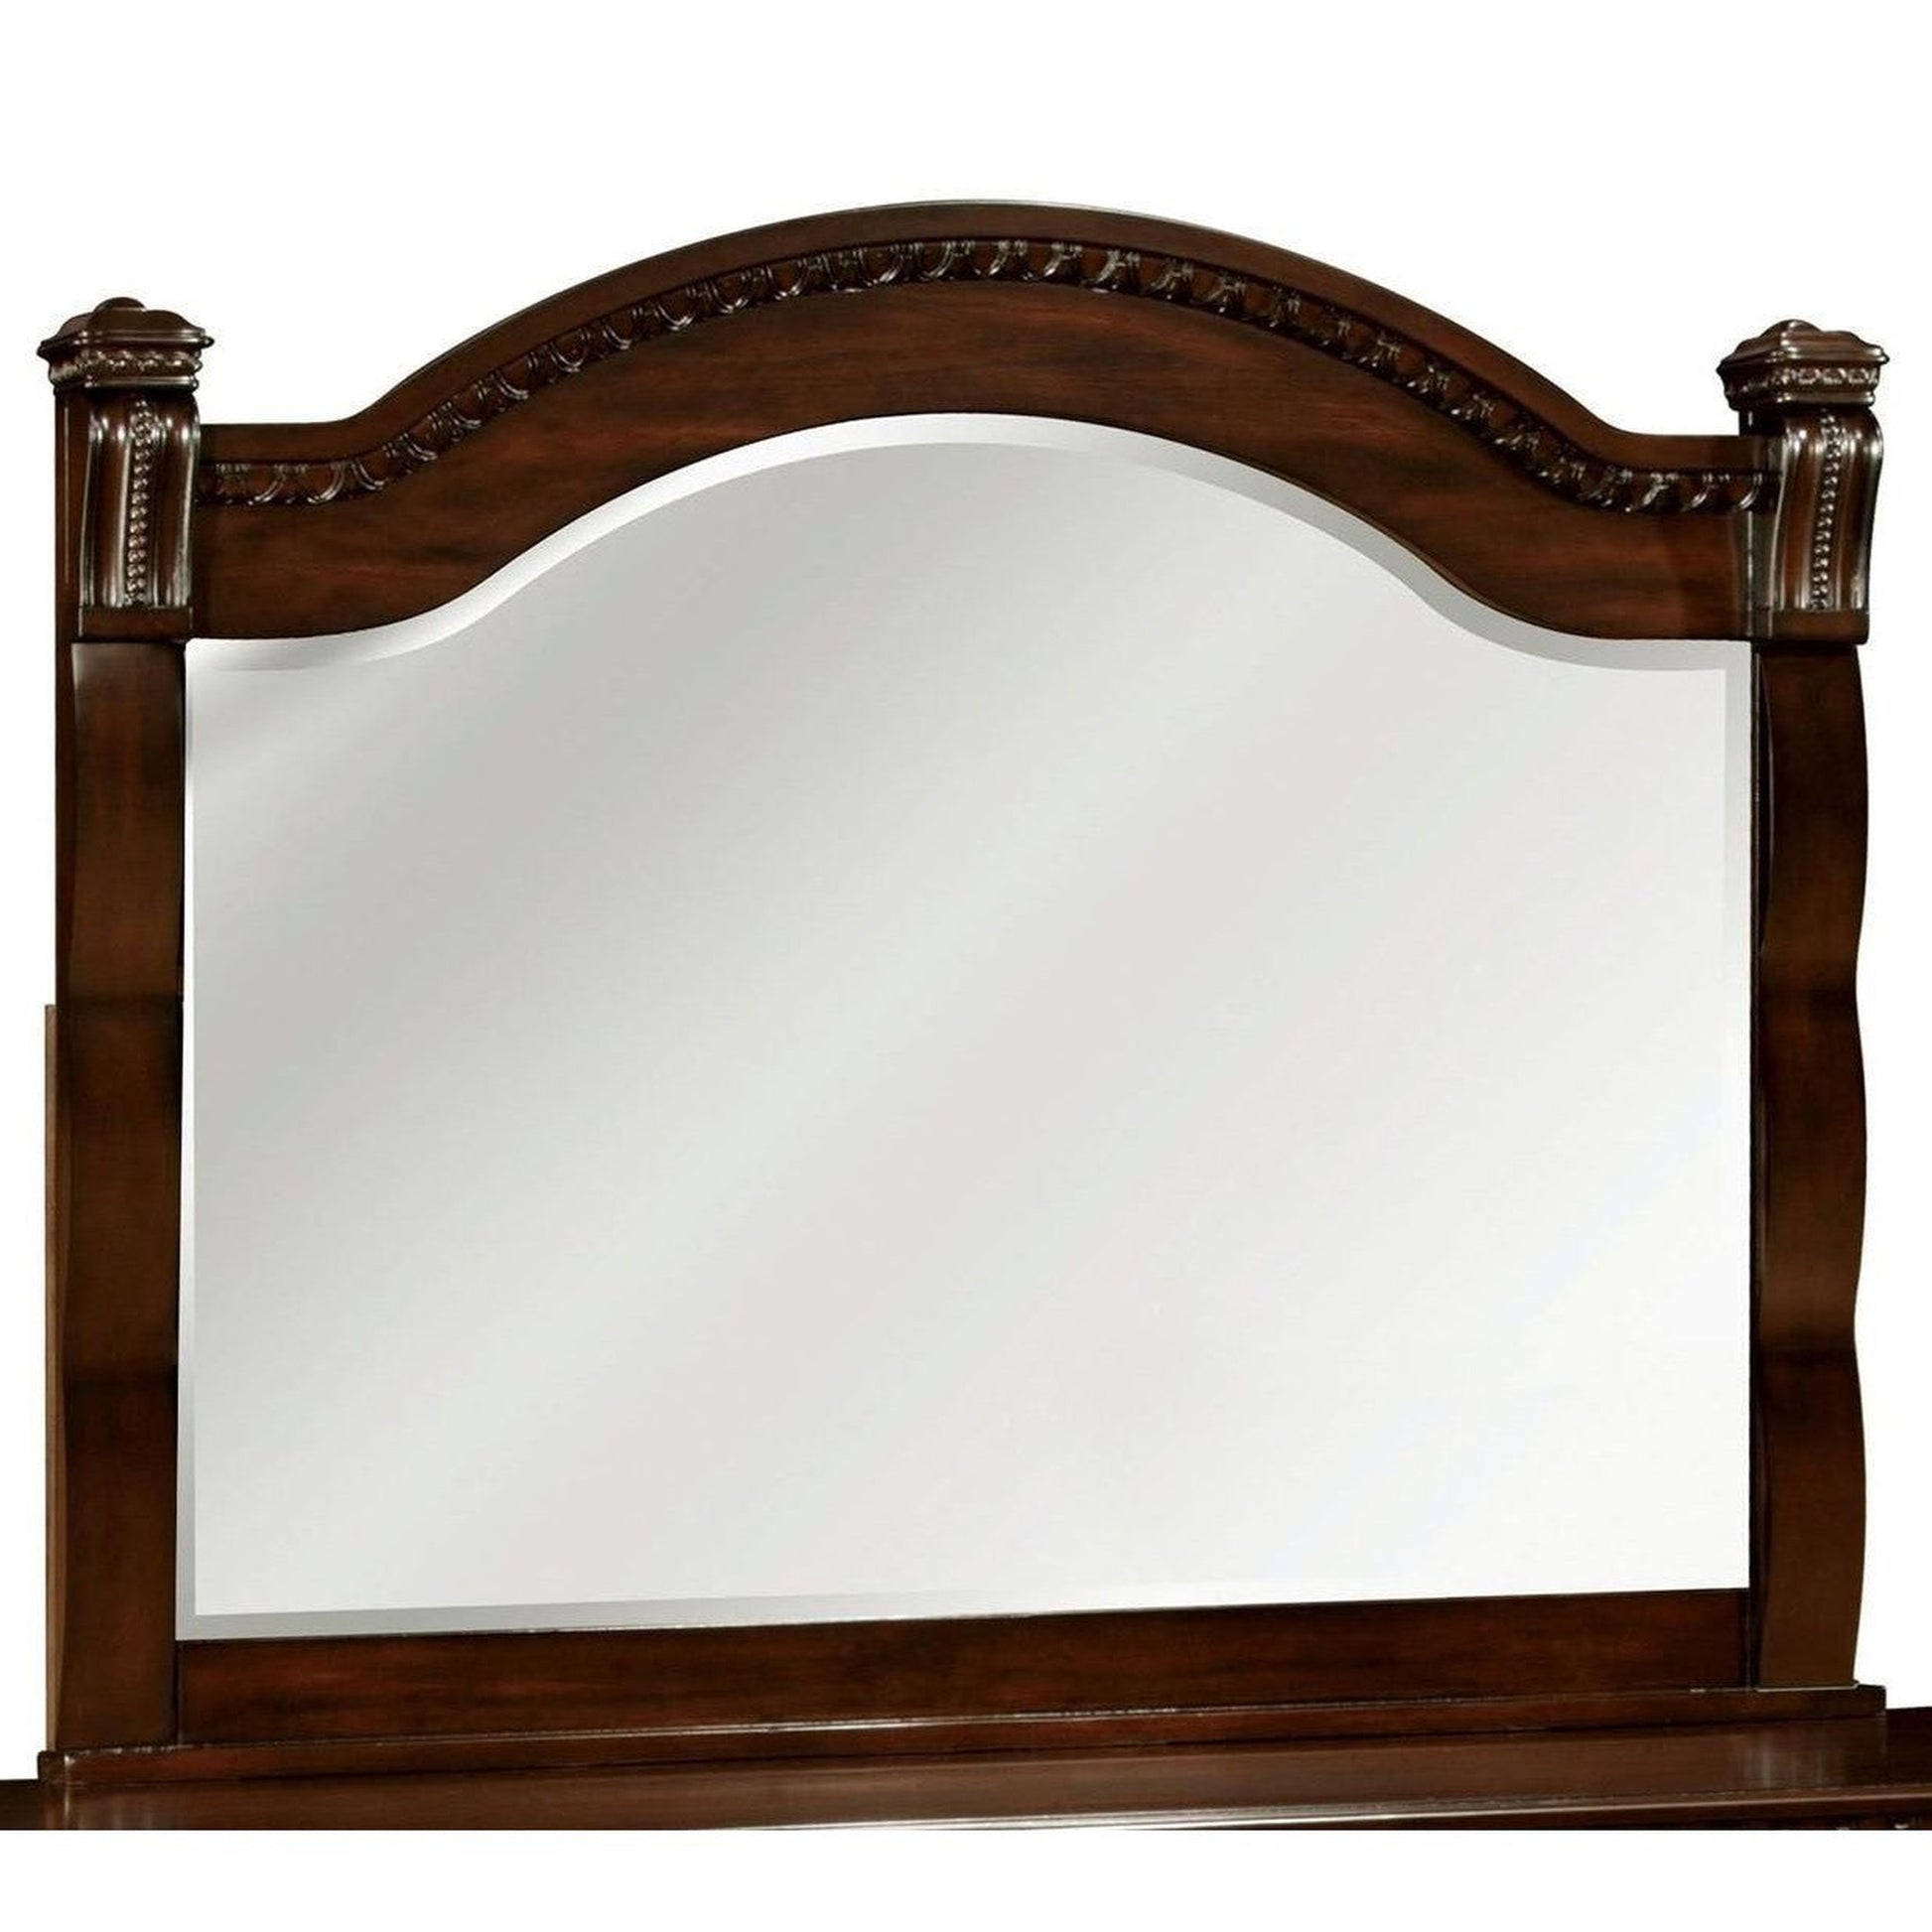 Benzara Burleigh Cherry Transitional Style Wooden Framed Wall Mirror